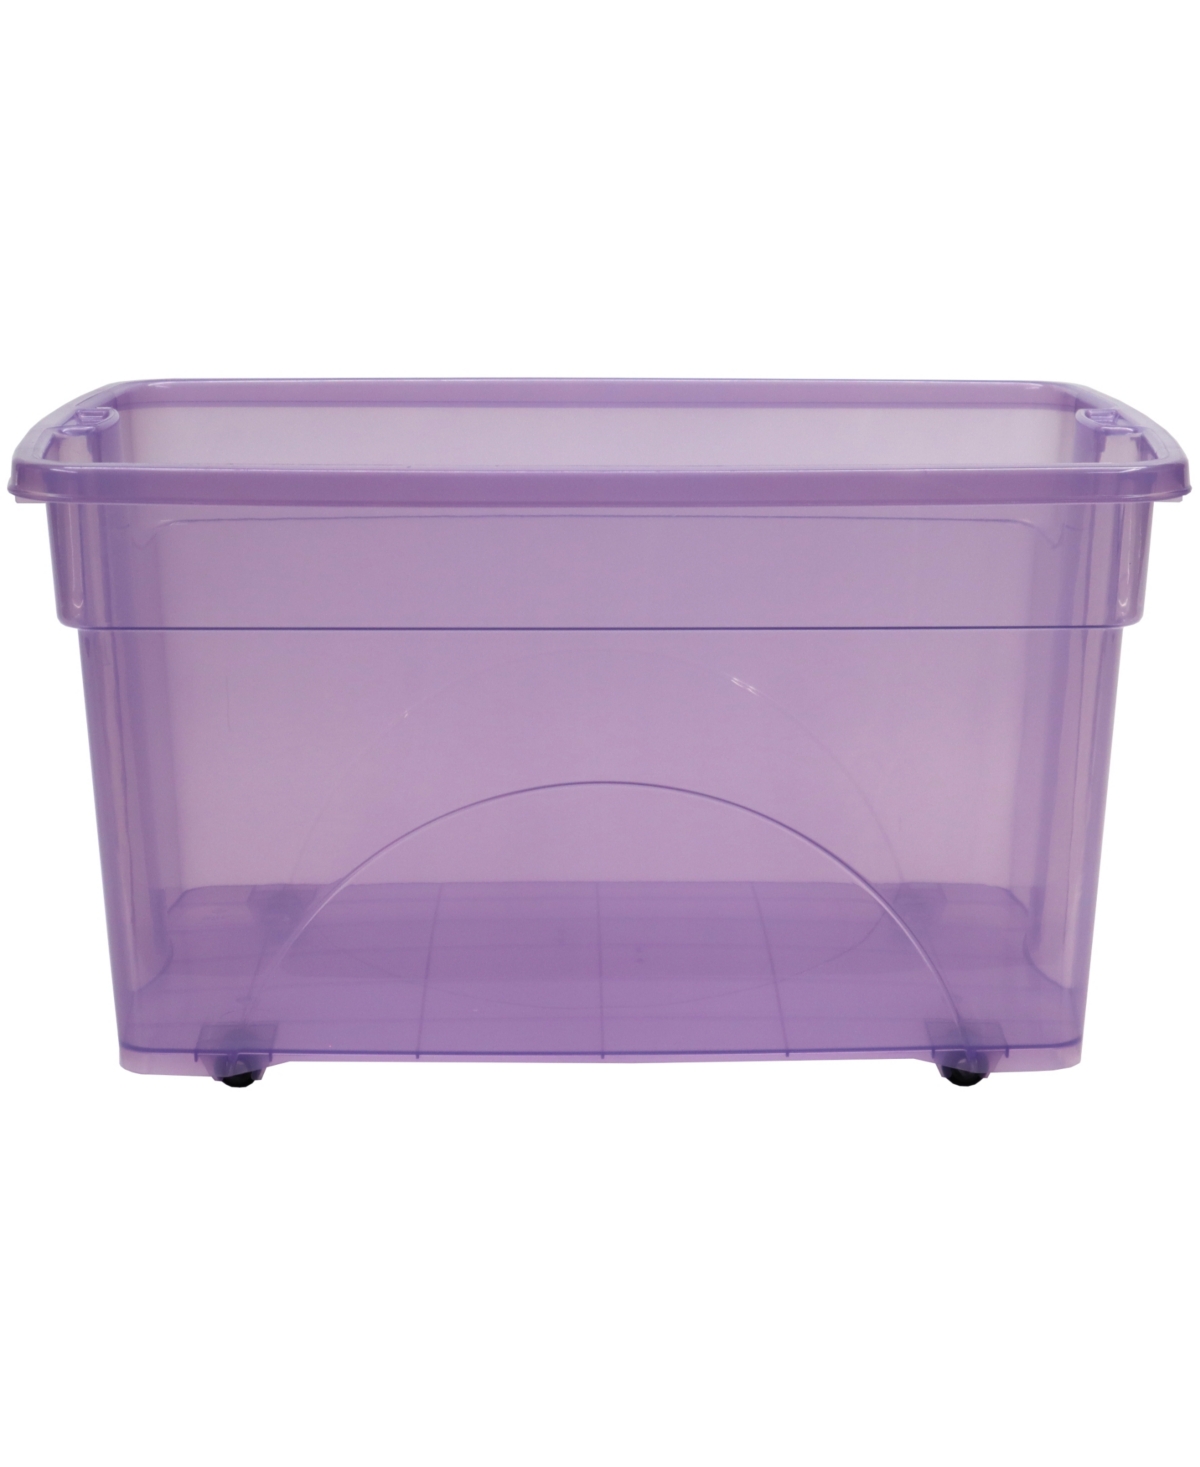 16 Gallon Rolling Bin Storage Organizer - Lavender